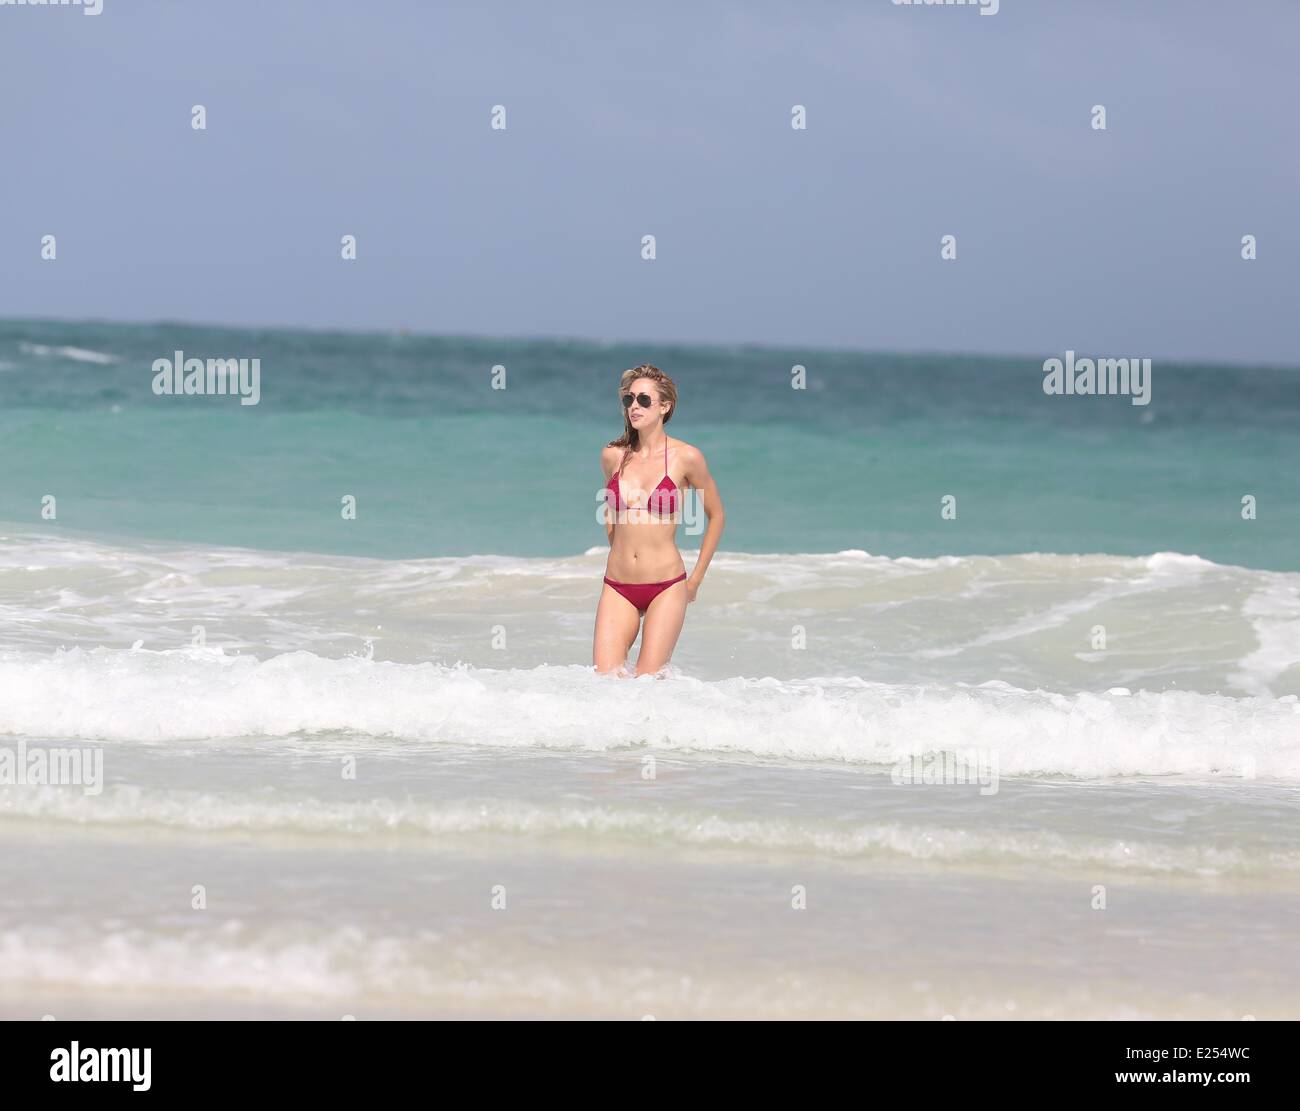 Lauren Stoner enjoys a day on Miami beach in a skimpy purple bikini  Where: Miami, Florida, United States When: 10 Jul 2013 Cred Stock Photo